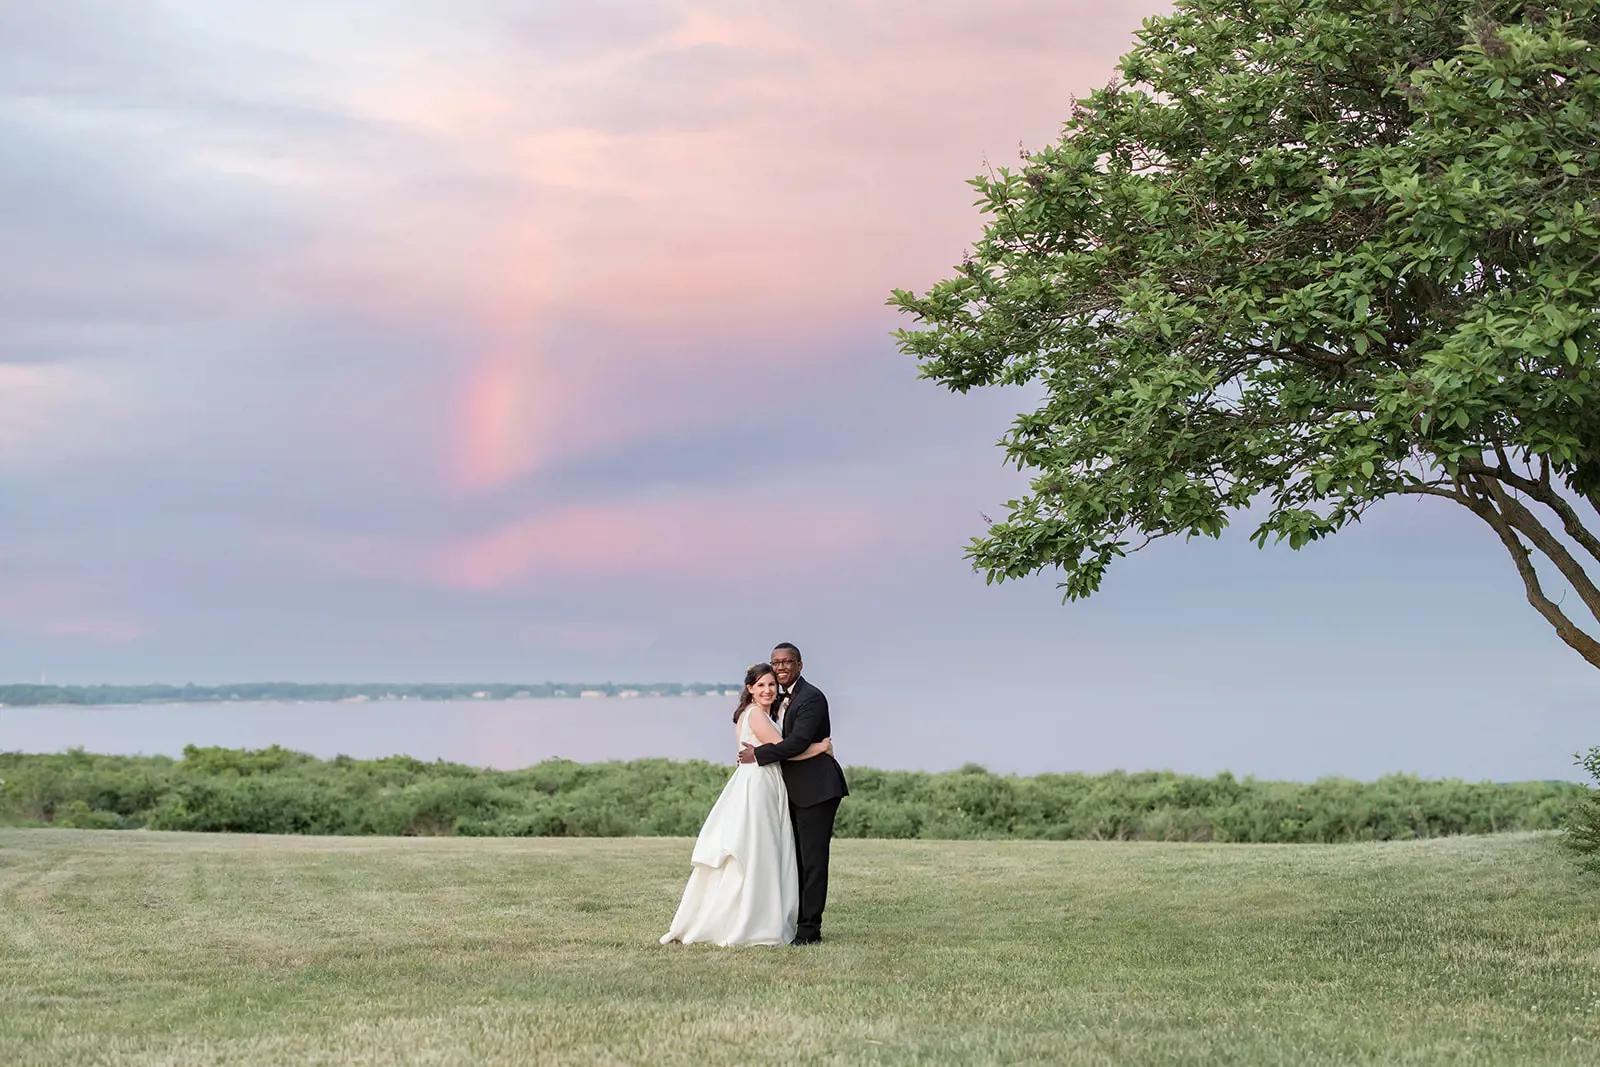 Classic Connecticut Shoreline Wedding | Pretty Post. Desktop Image